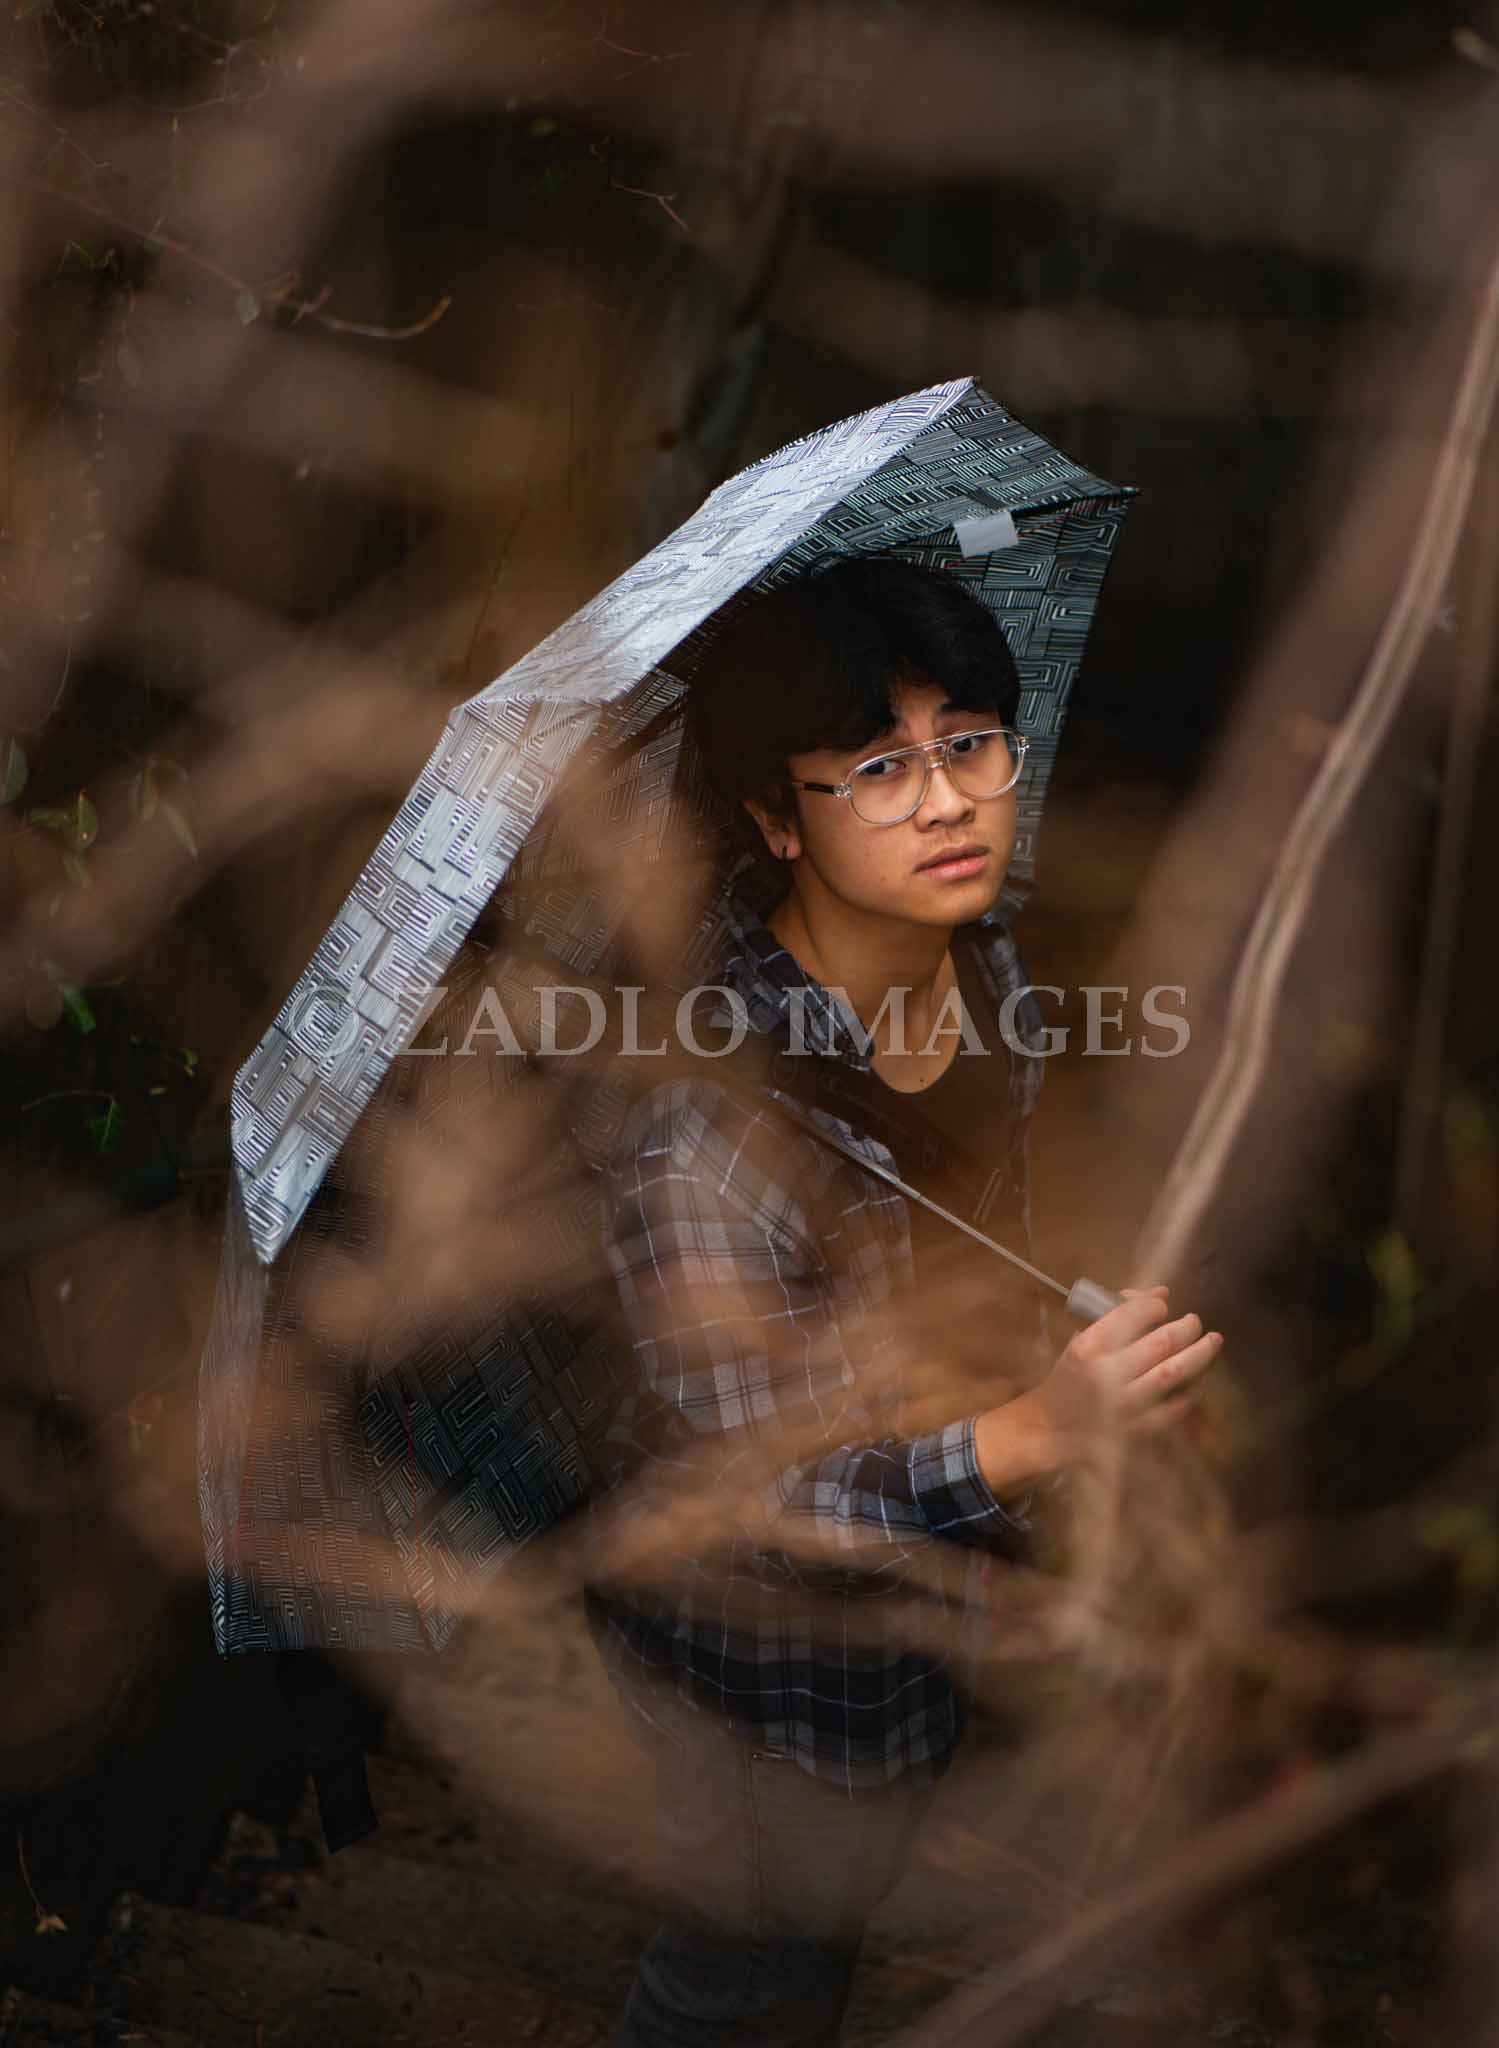 Teen boy holding umbrella.